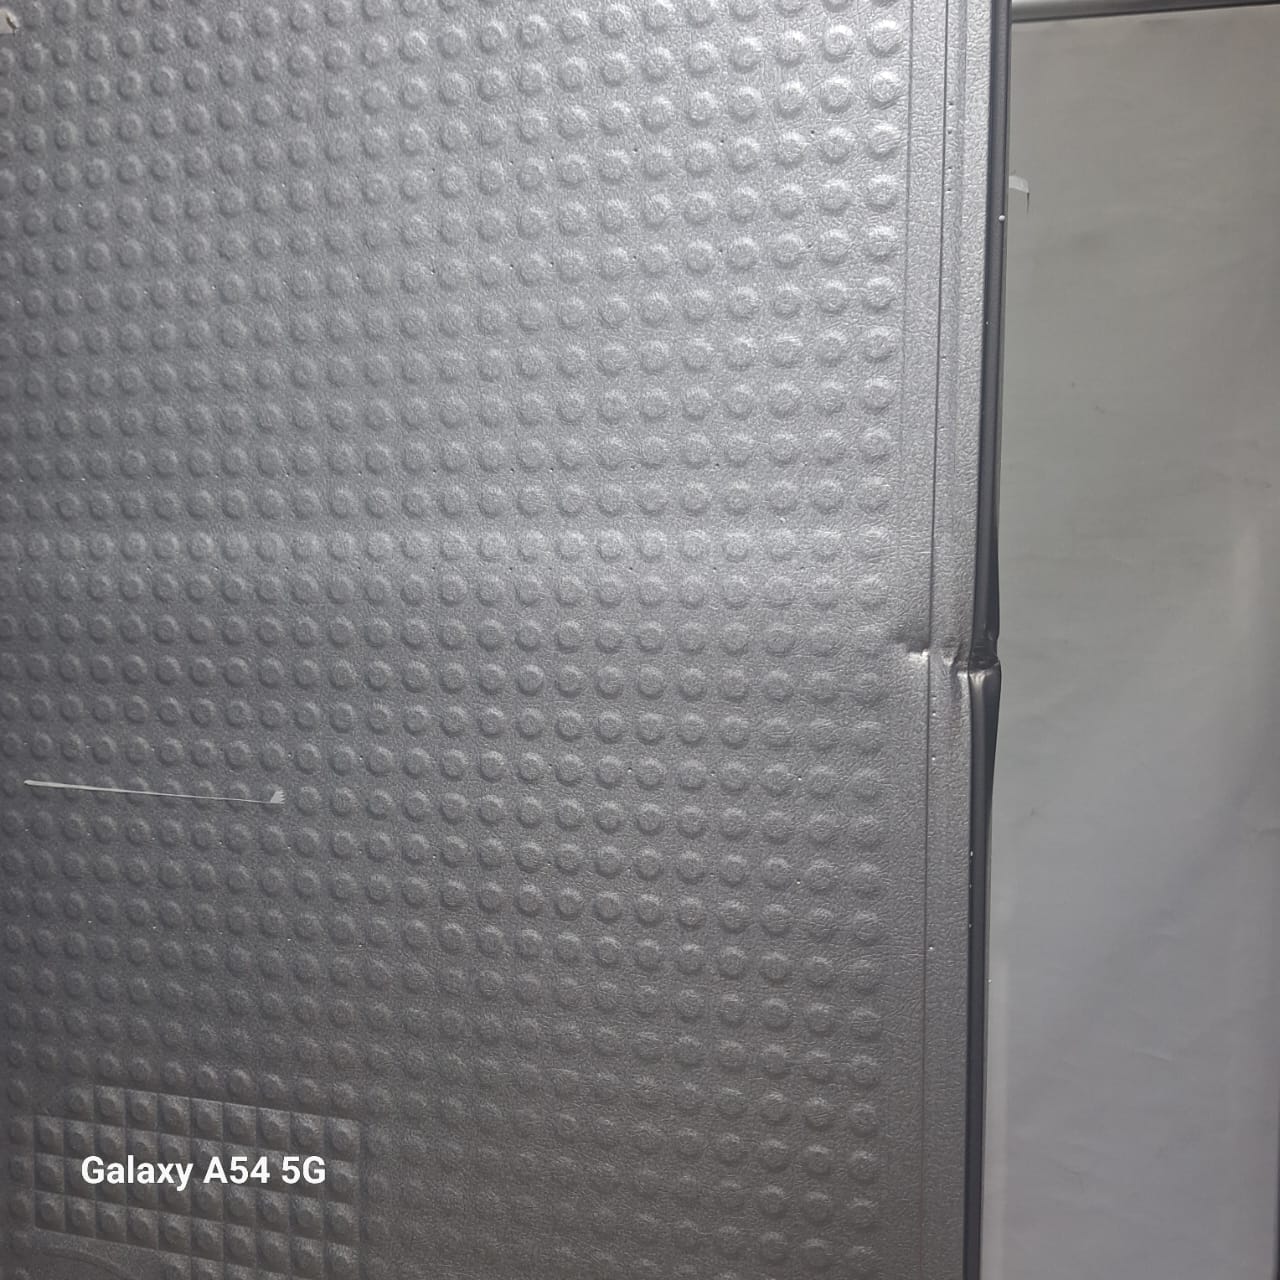 Refrigerador Congelador Samsung Rs64T5F61S9/Zs Sistema De Deshielo Silver 598Lt [Openbox]